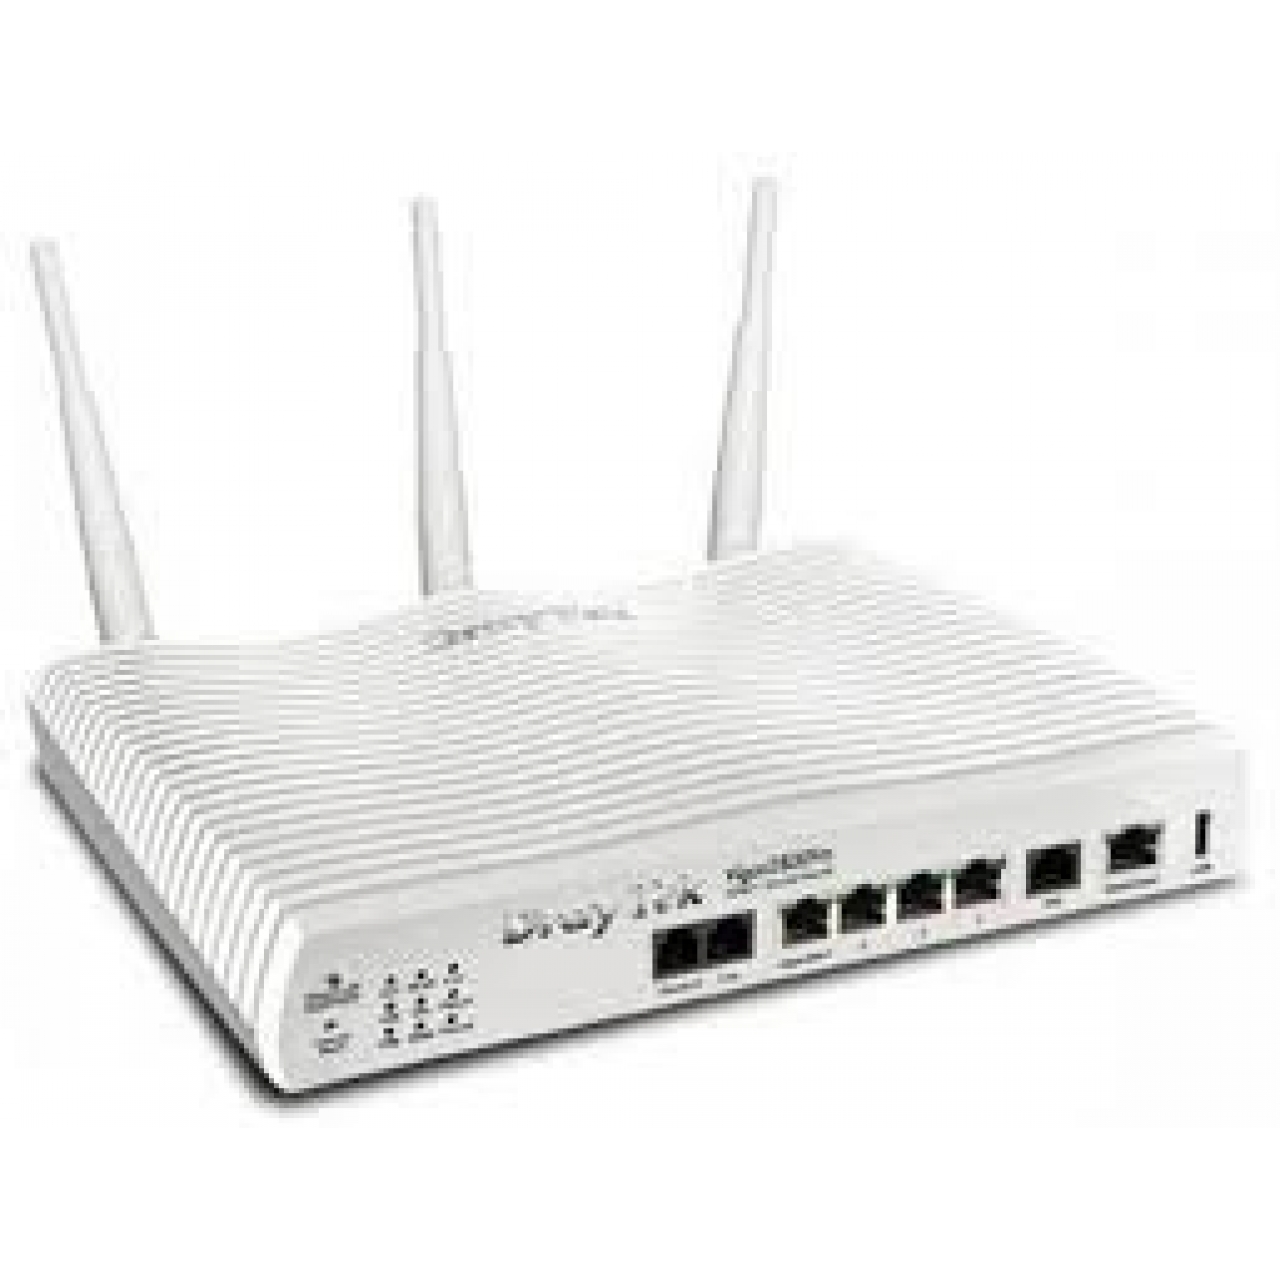 Draytek Vigor 2830 Dual WAN (ADSL2+ - Gigabit) VPN Security Router Modem